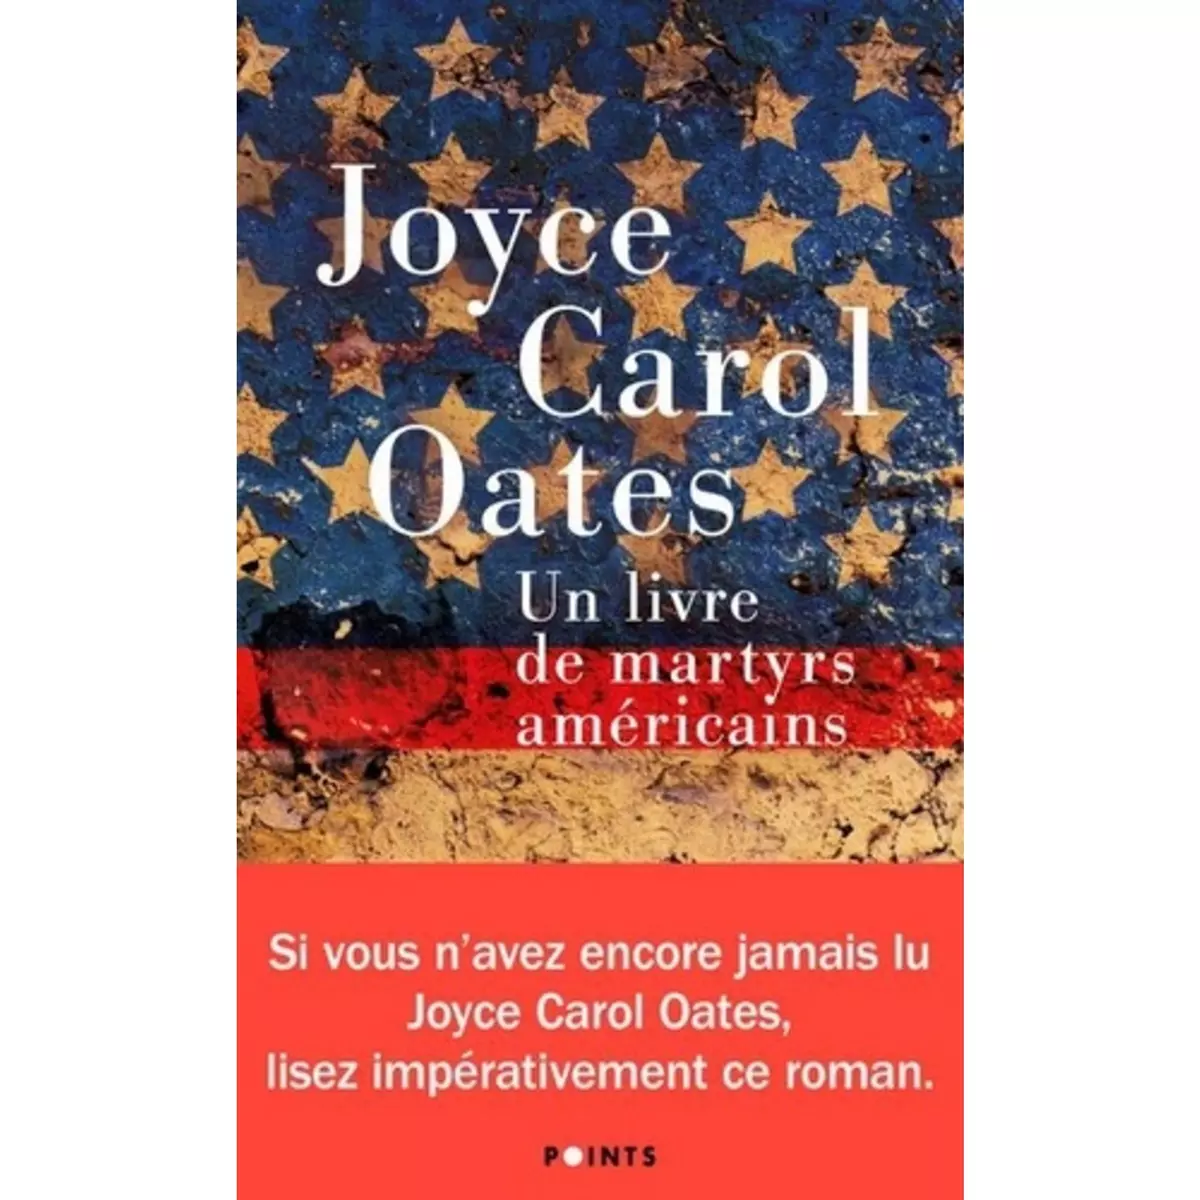  UN LIVRE DE MARTYRS AMERICAINS, Oates Joyce Carol